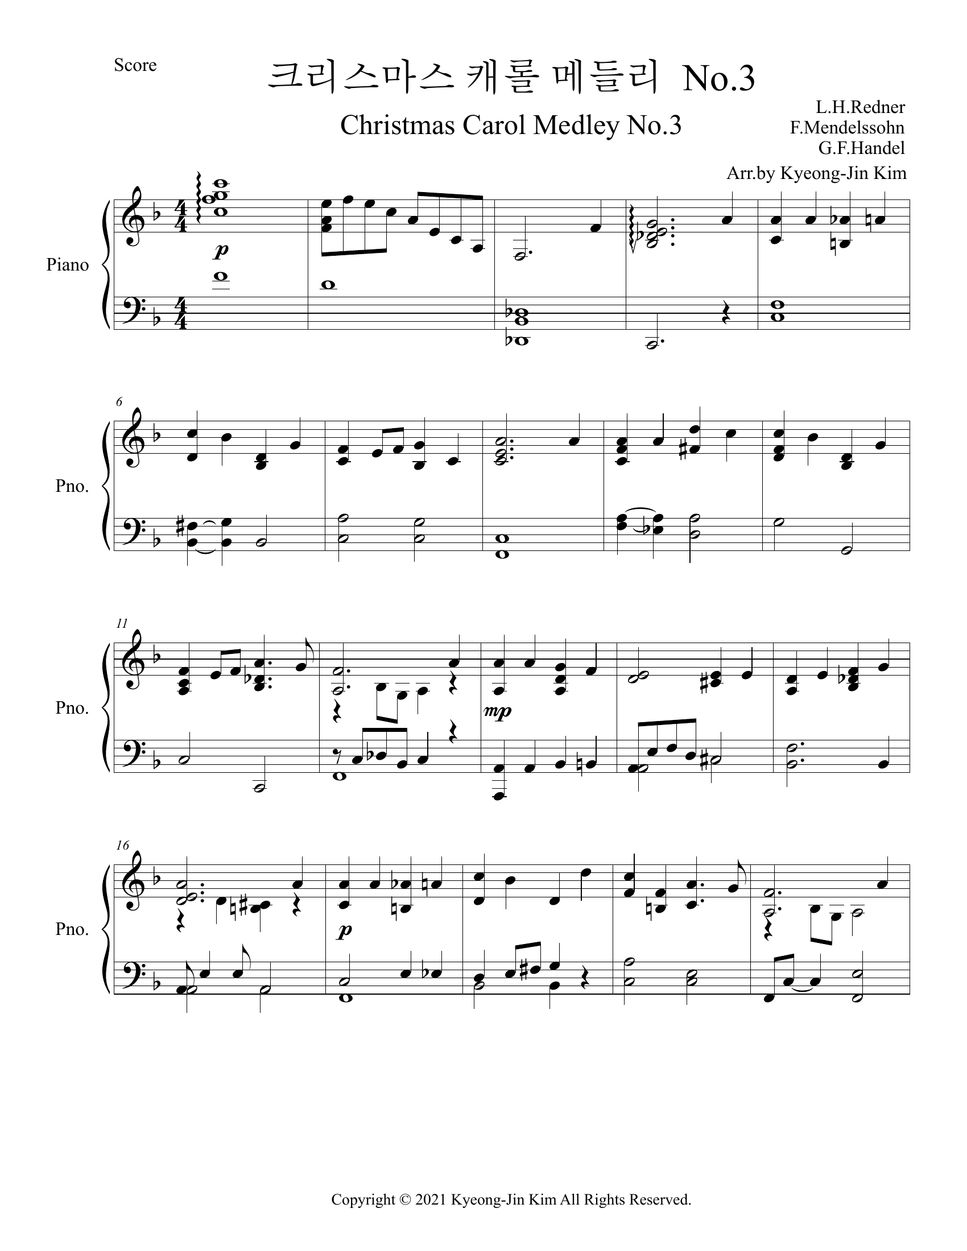 Hymn - Christmas Carol Medley No.3 Sheets by Pianist Jin